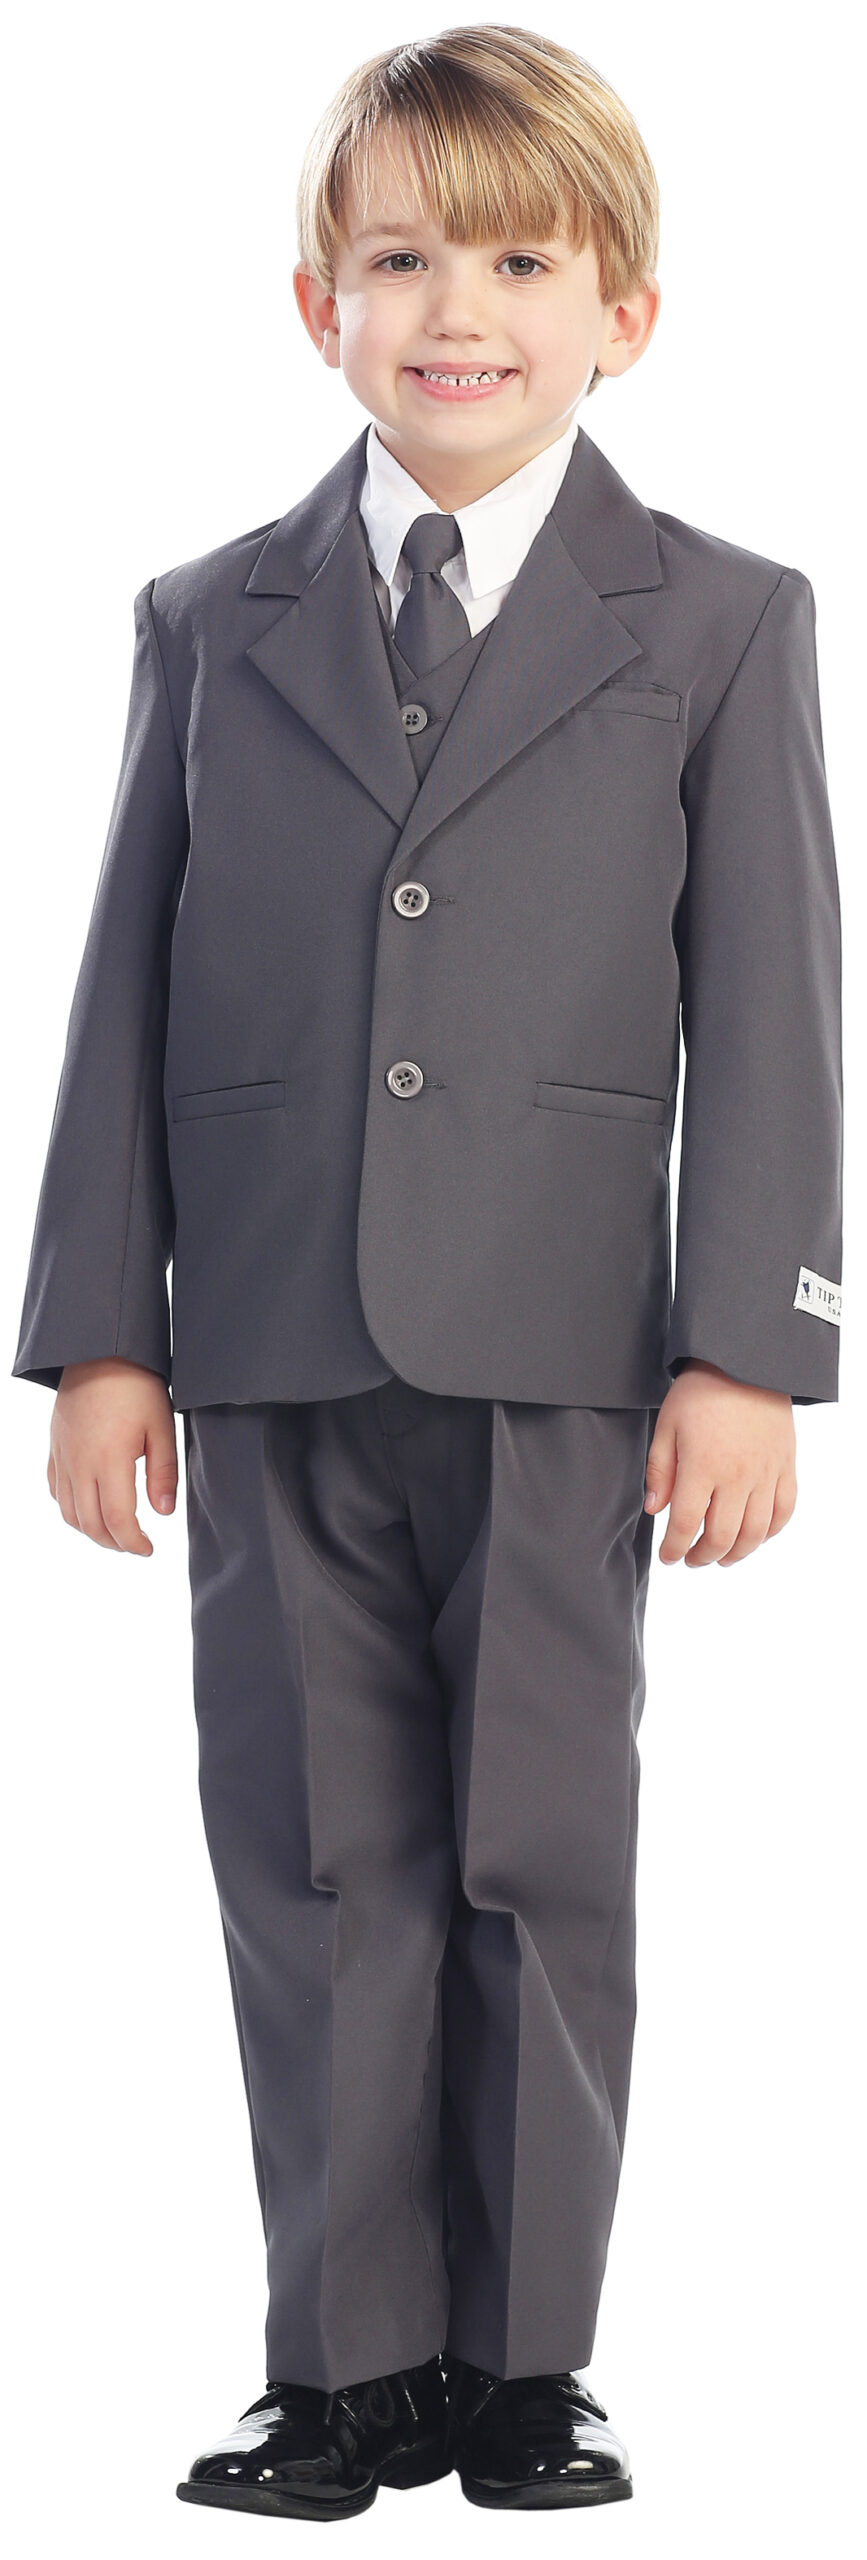 Avery Hill 5-Piece Boy's 2-Button Dress Suit Full-Back Vest - Charcoal Grey Size 12